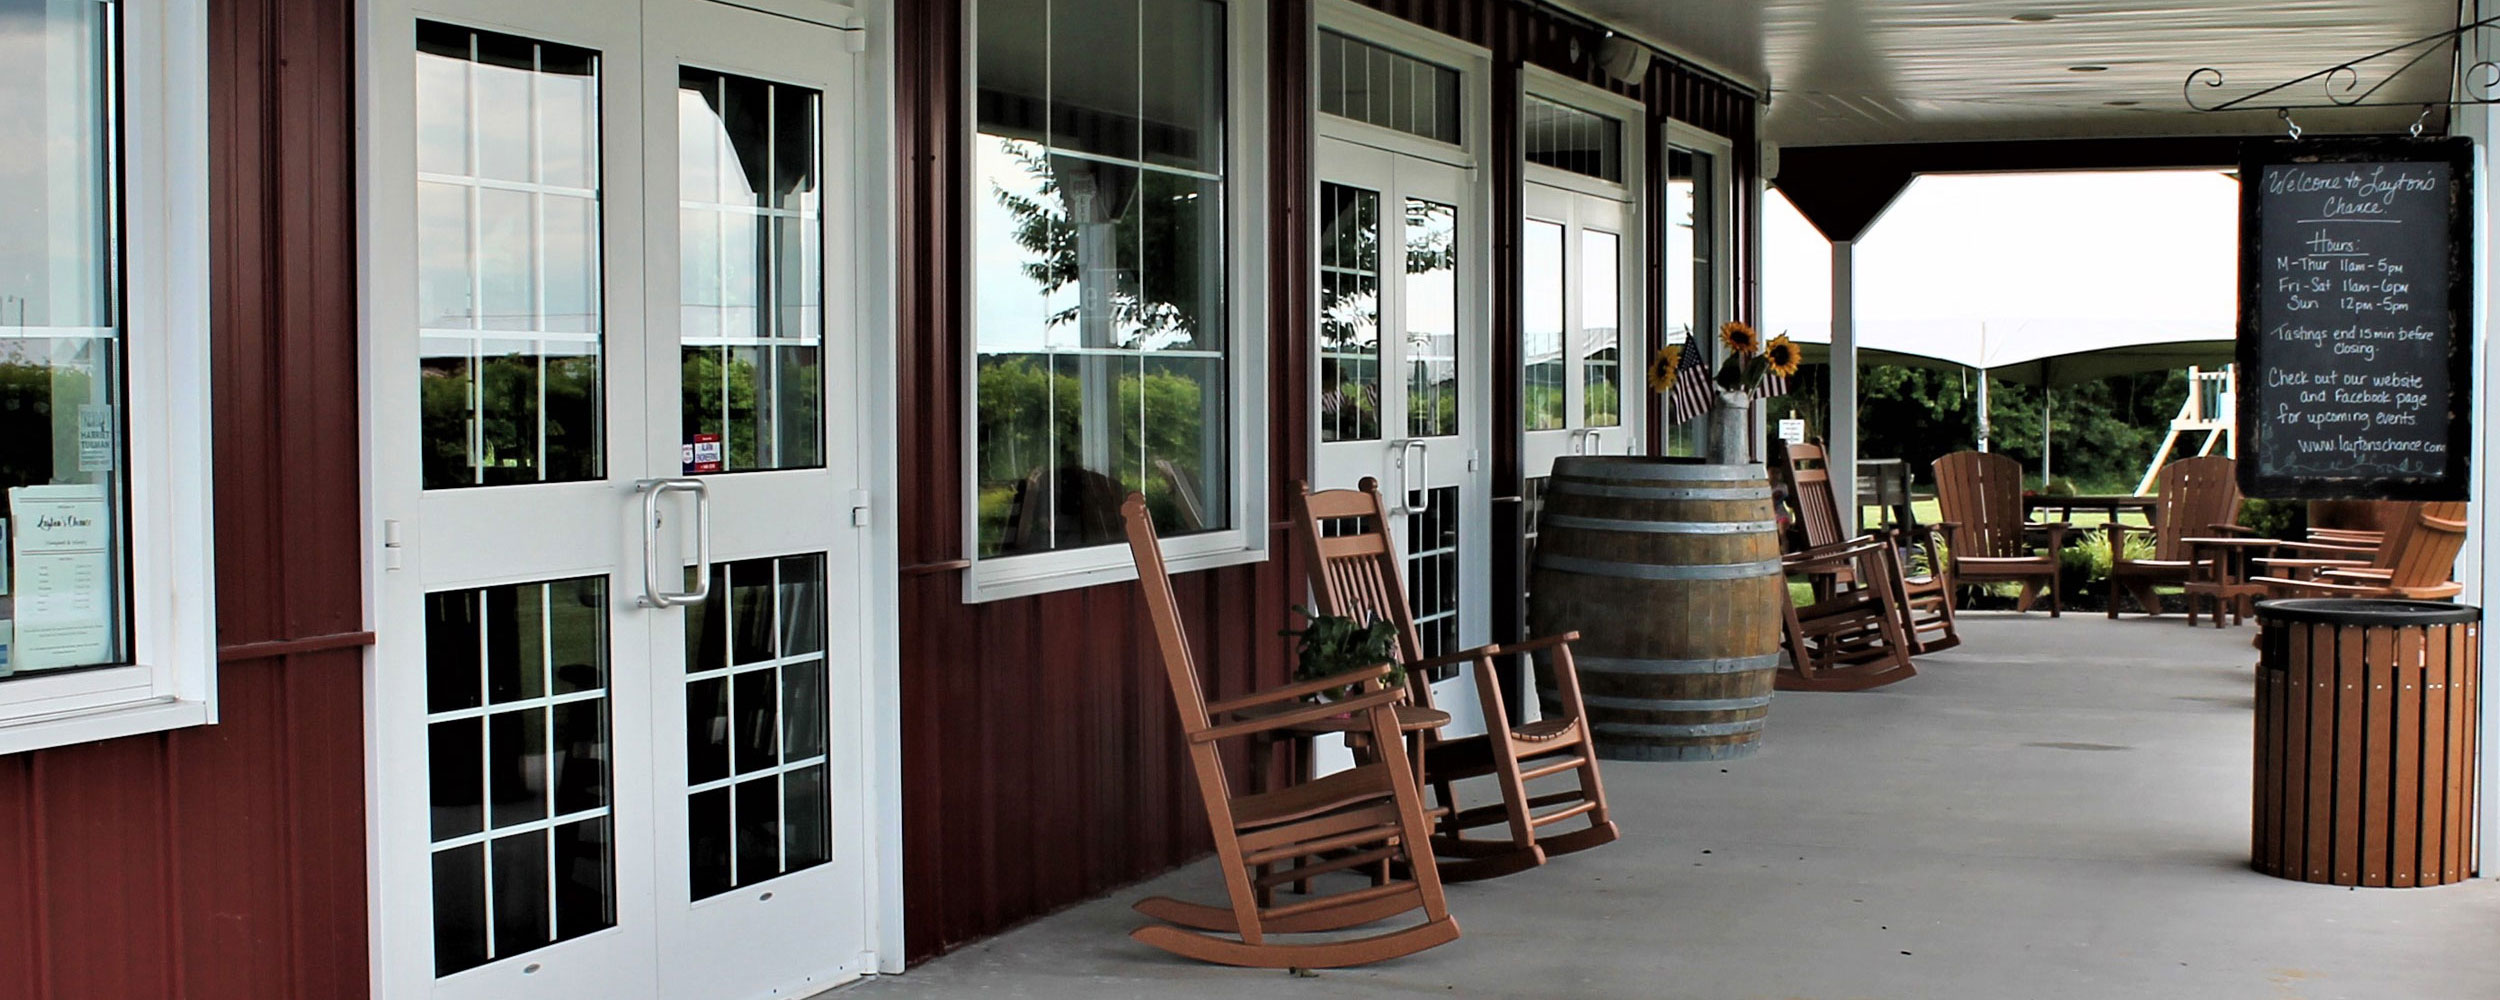 Layton's Chance Vineyard & Winery - Tasting Room Porch